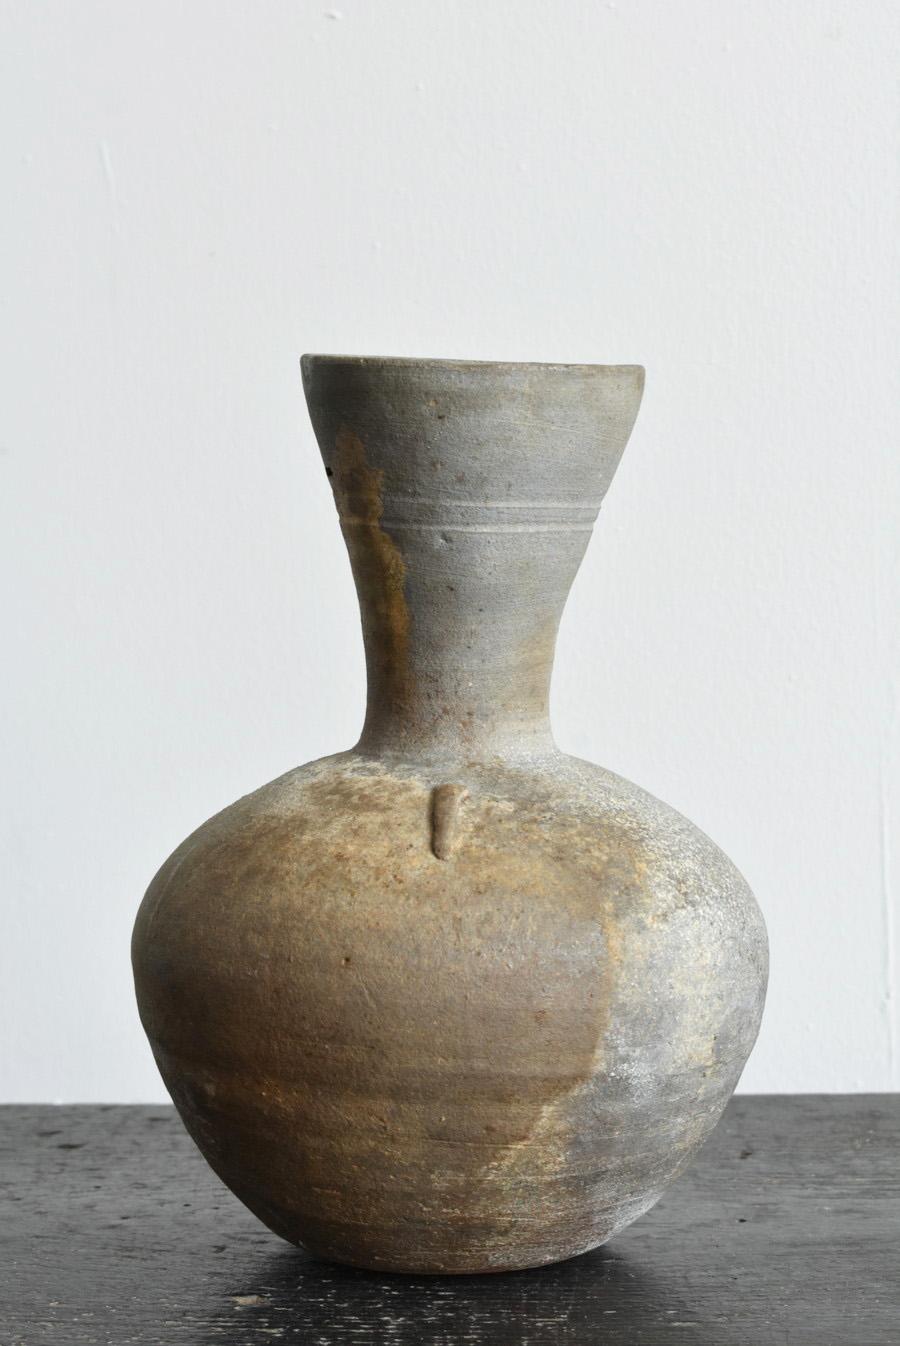 Unglazed Antique Pottery Vase with a Sense of Japanese Wabi-Sabi / Early 9th Century